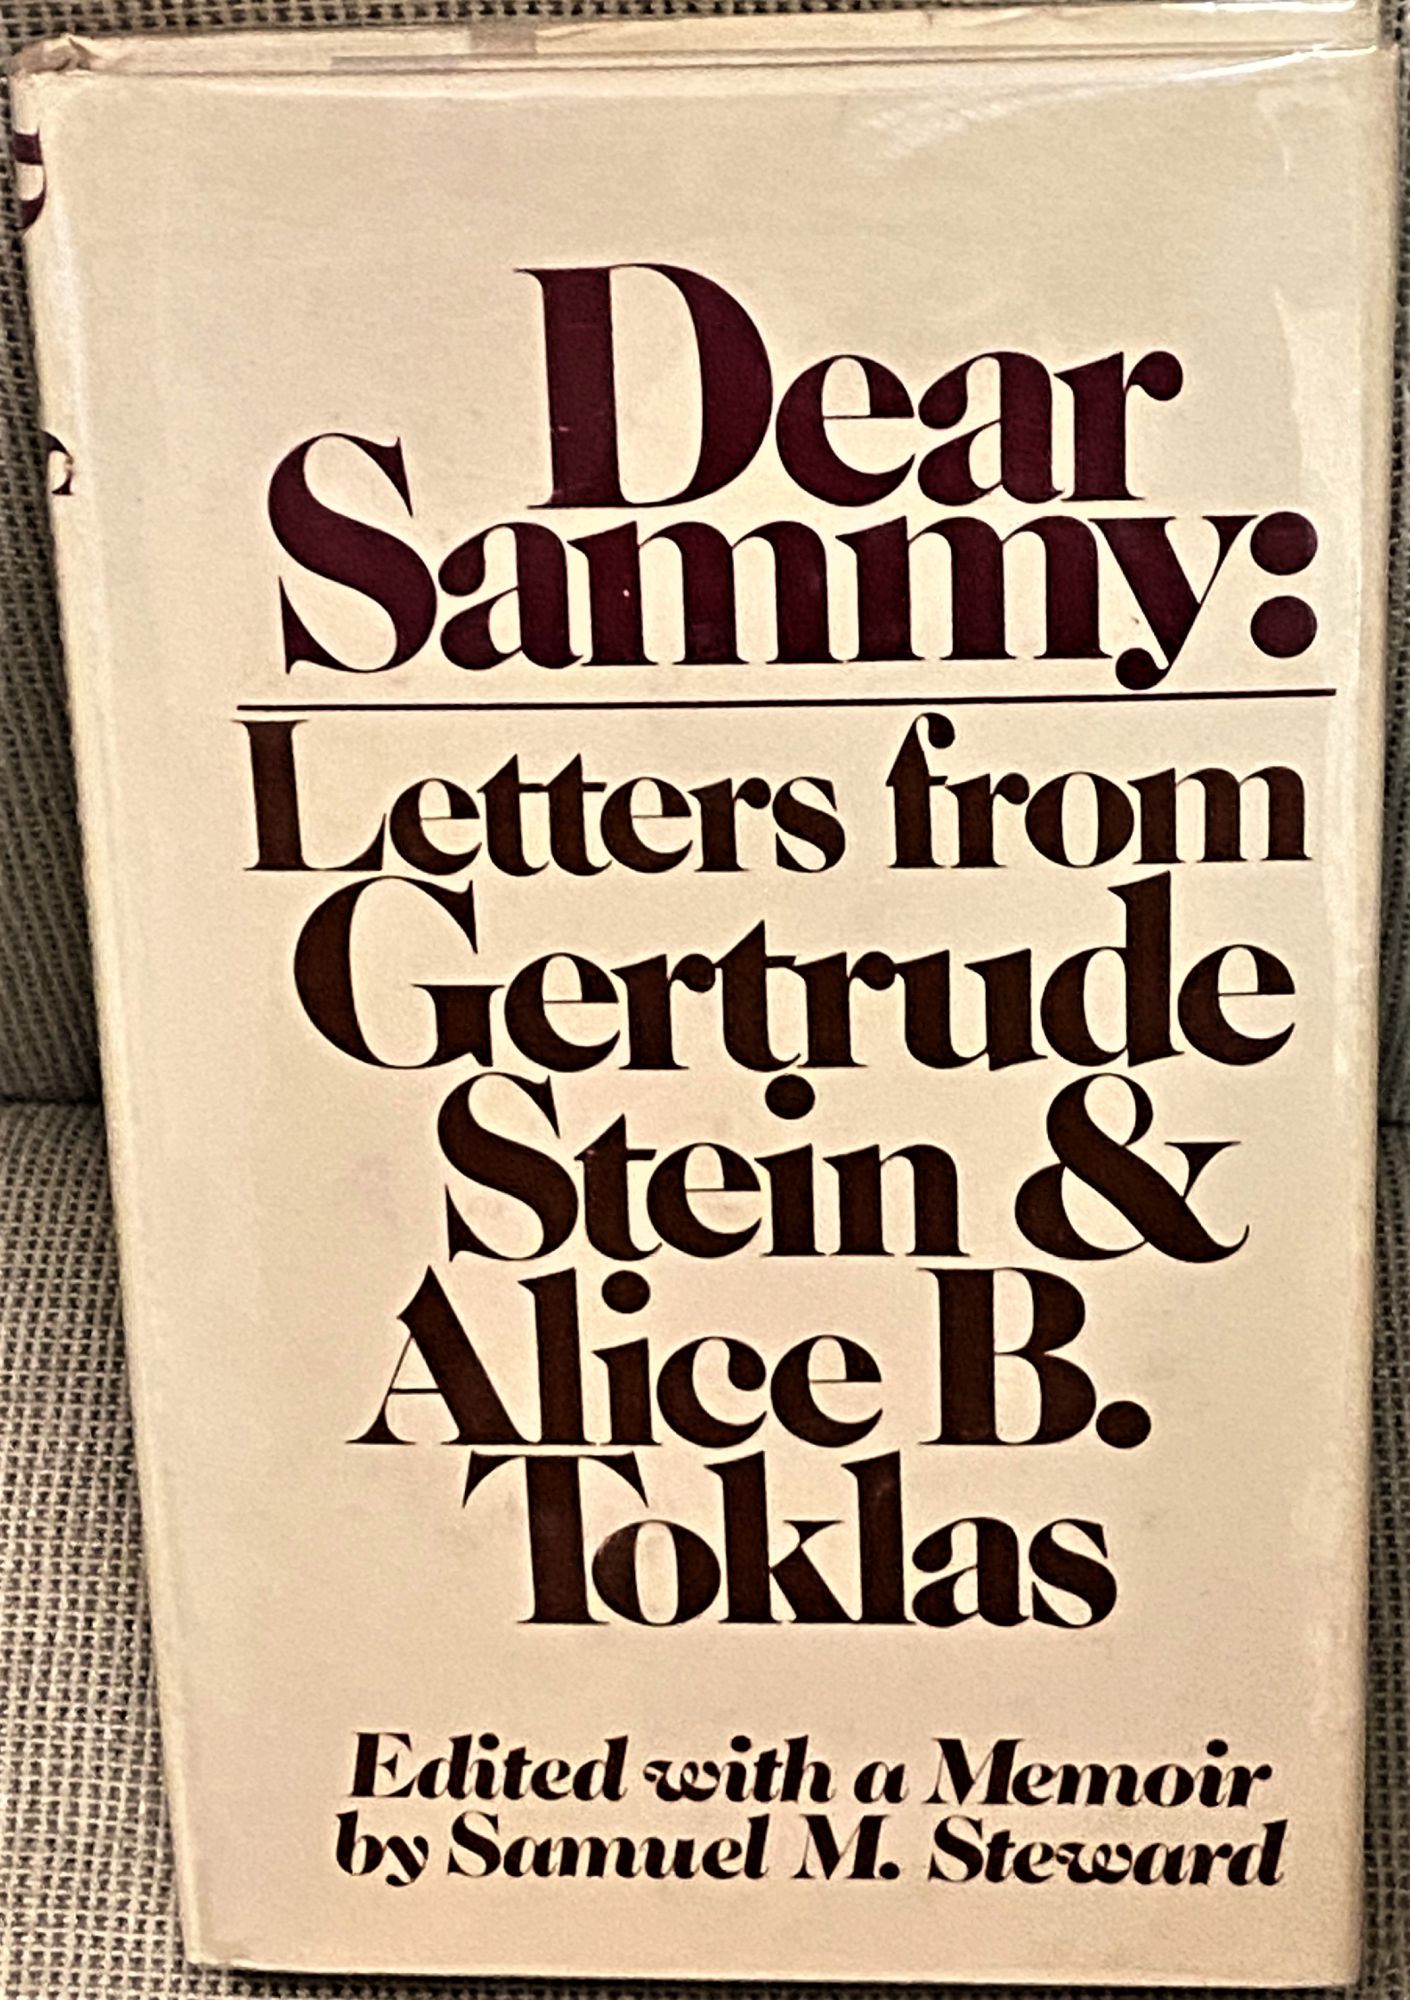 Dear Sammy: Letters from Gertrude Stein & Alice B. Toklas - Gertrude Stein, Alice B. Toklas; Samuel M. Steward (editor)